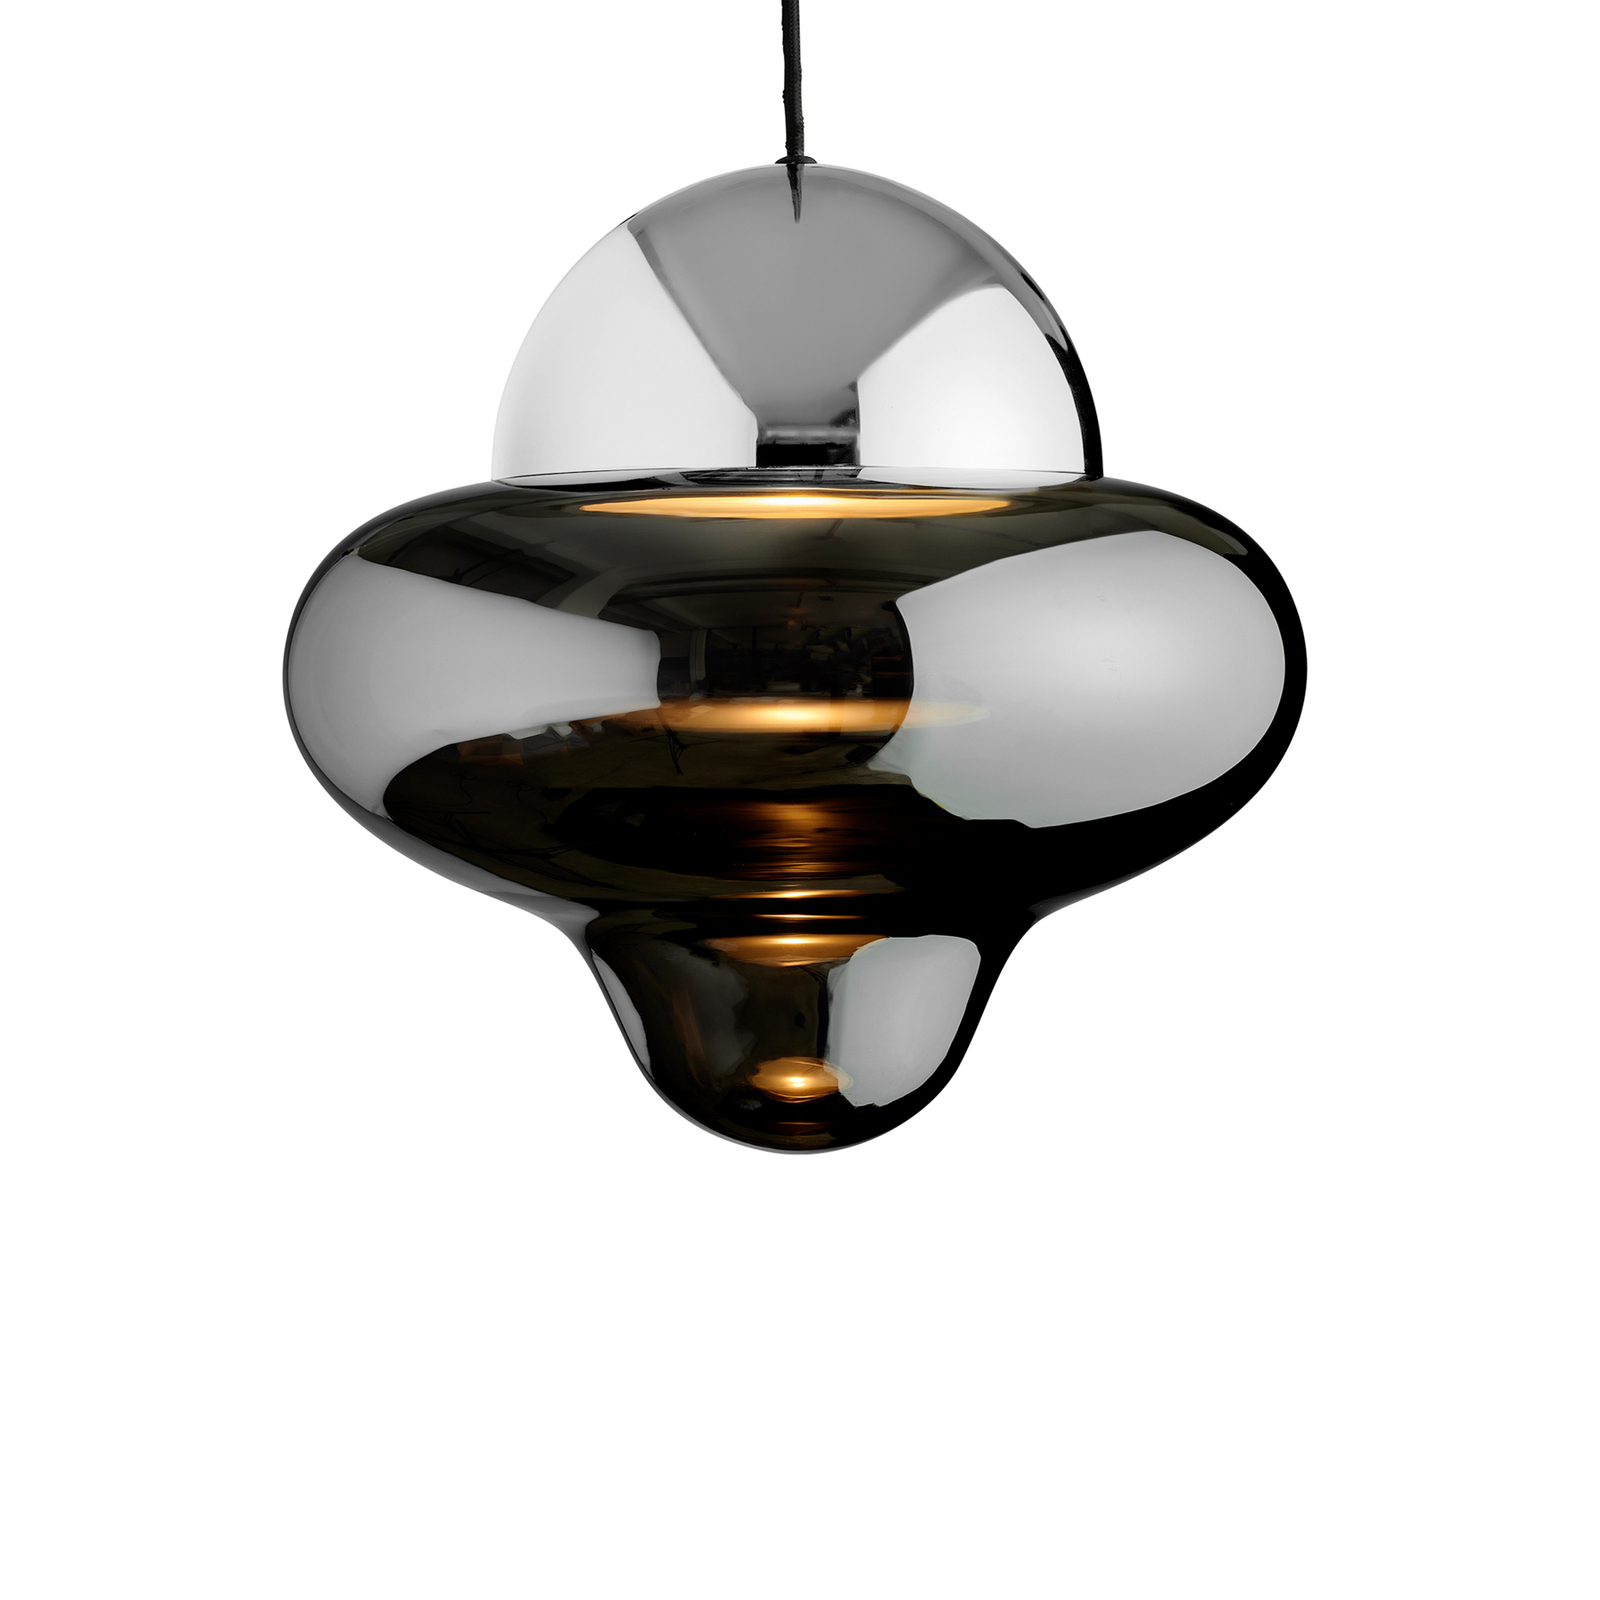 LED pendant light Nutty XL, smoke grey / chrome-coloured, Ø 30 cm